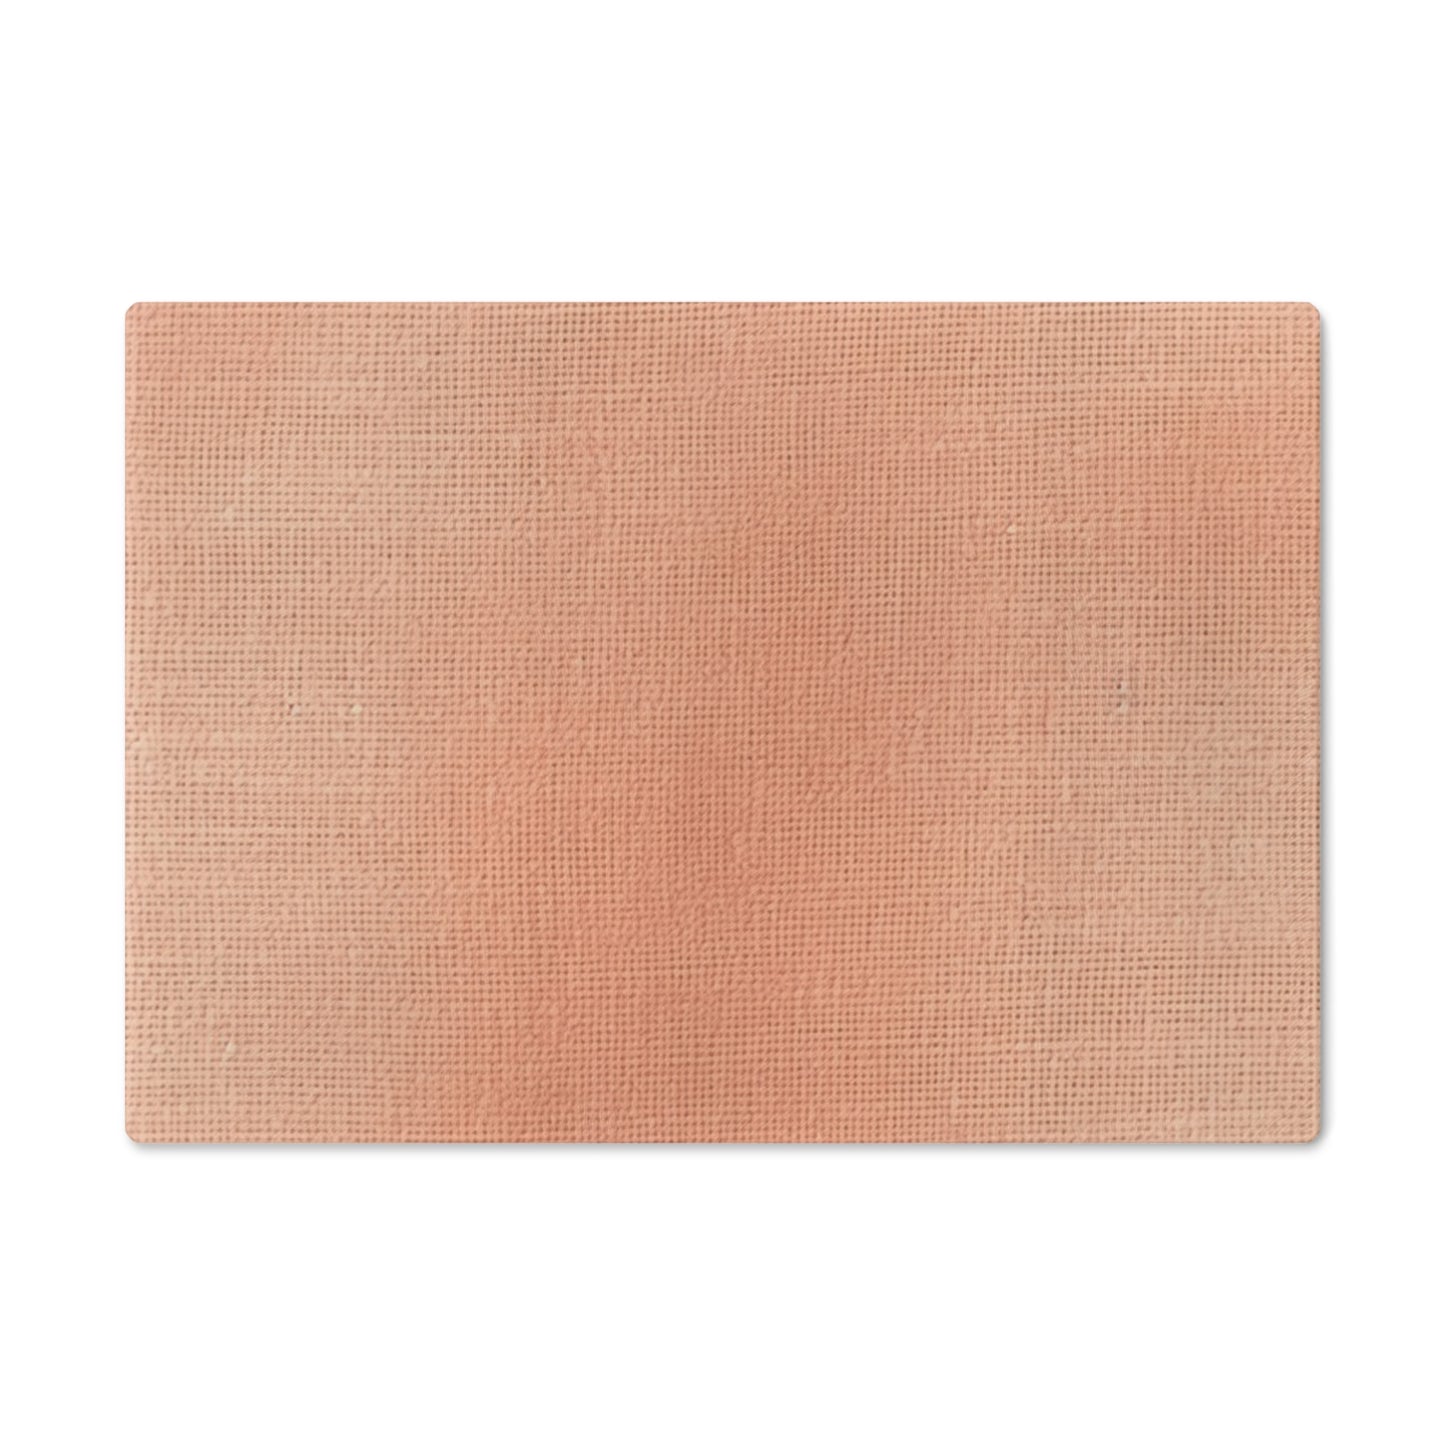 Soft Pink-Orange Peach: Denim-Inspired, Lush Fabric - Cutting Board